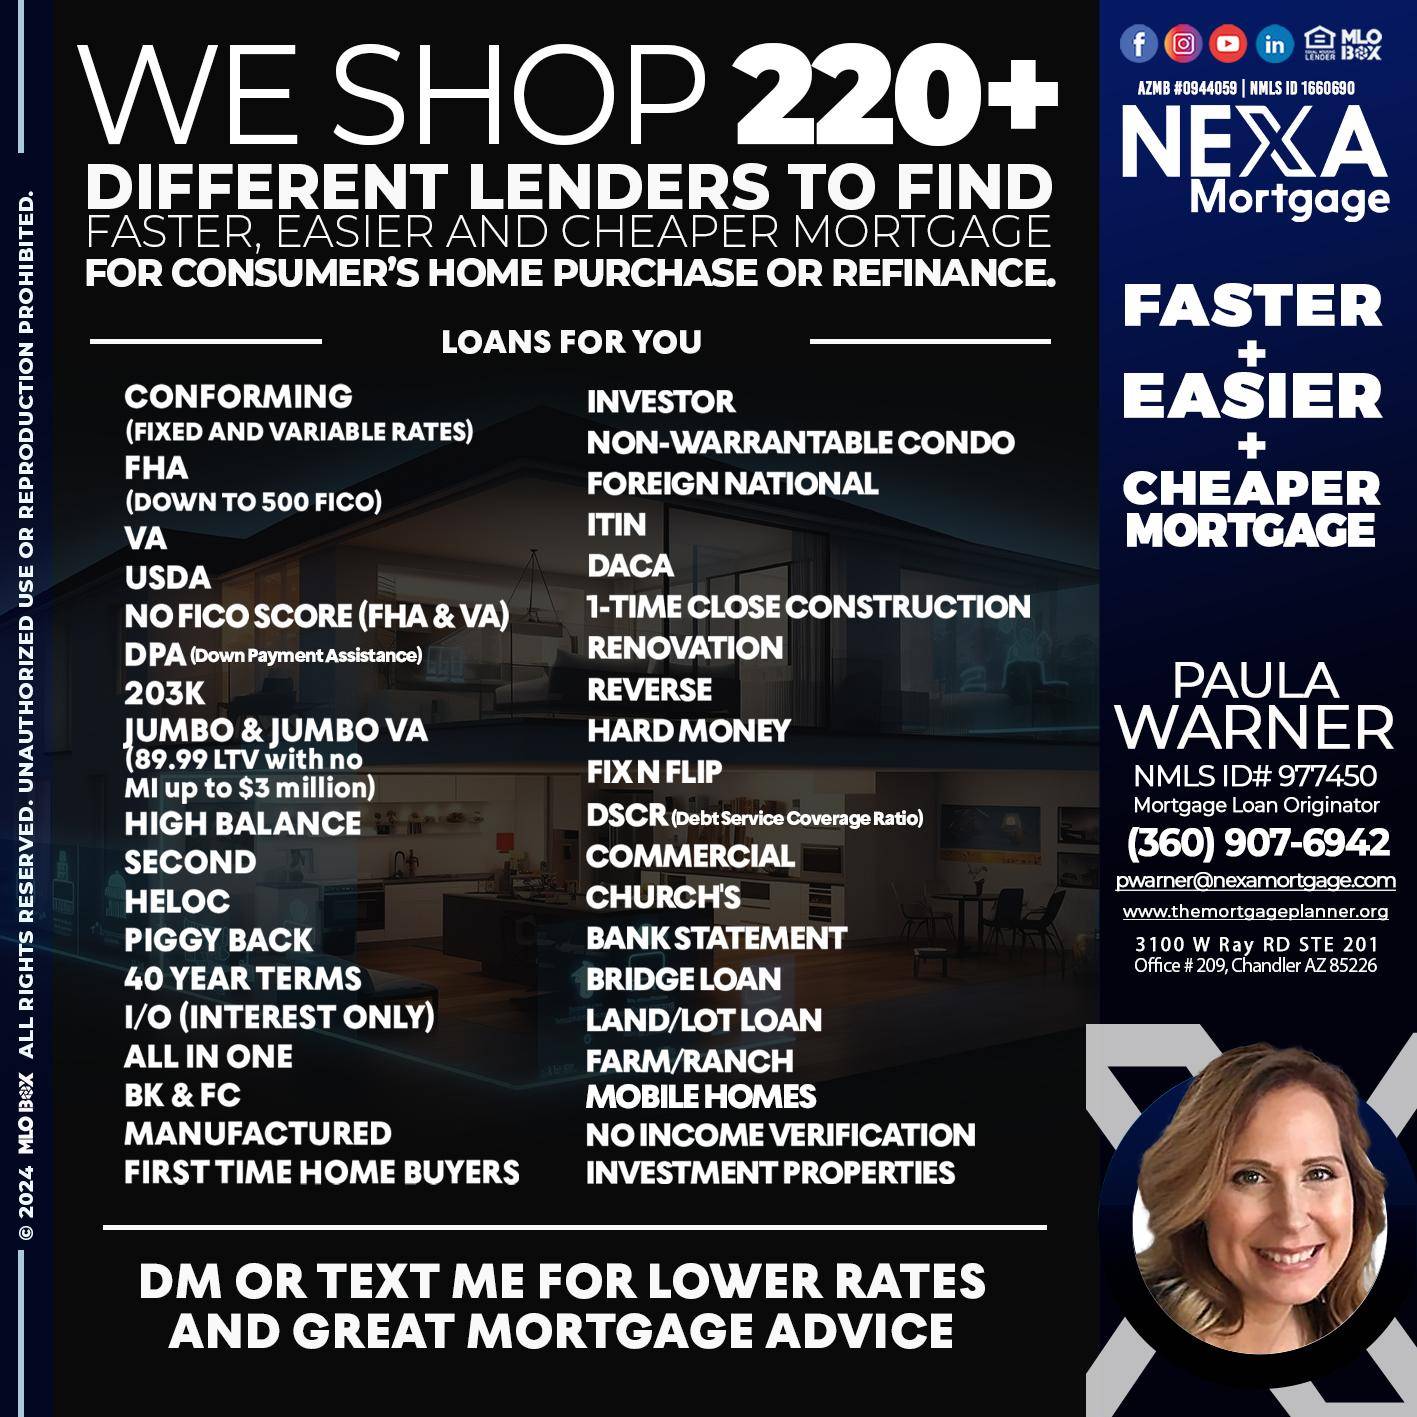 WE SHOP 220+ - Paula Warner -Mortgage Loan Originator